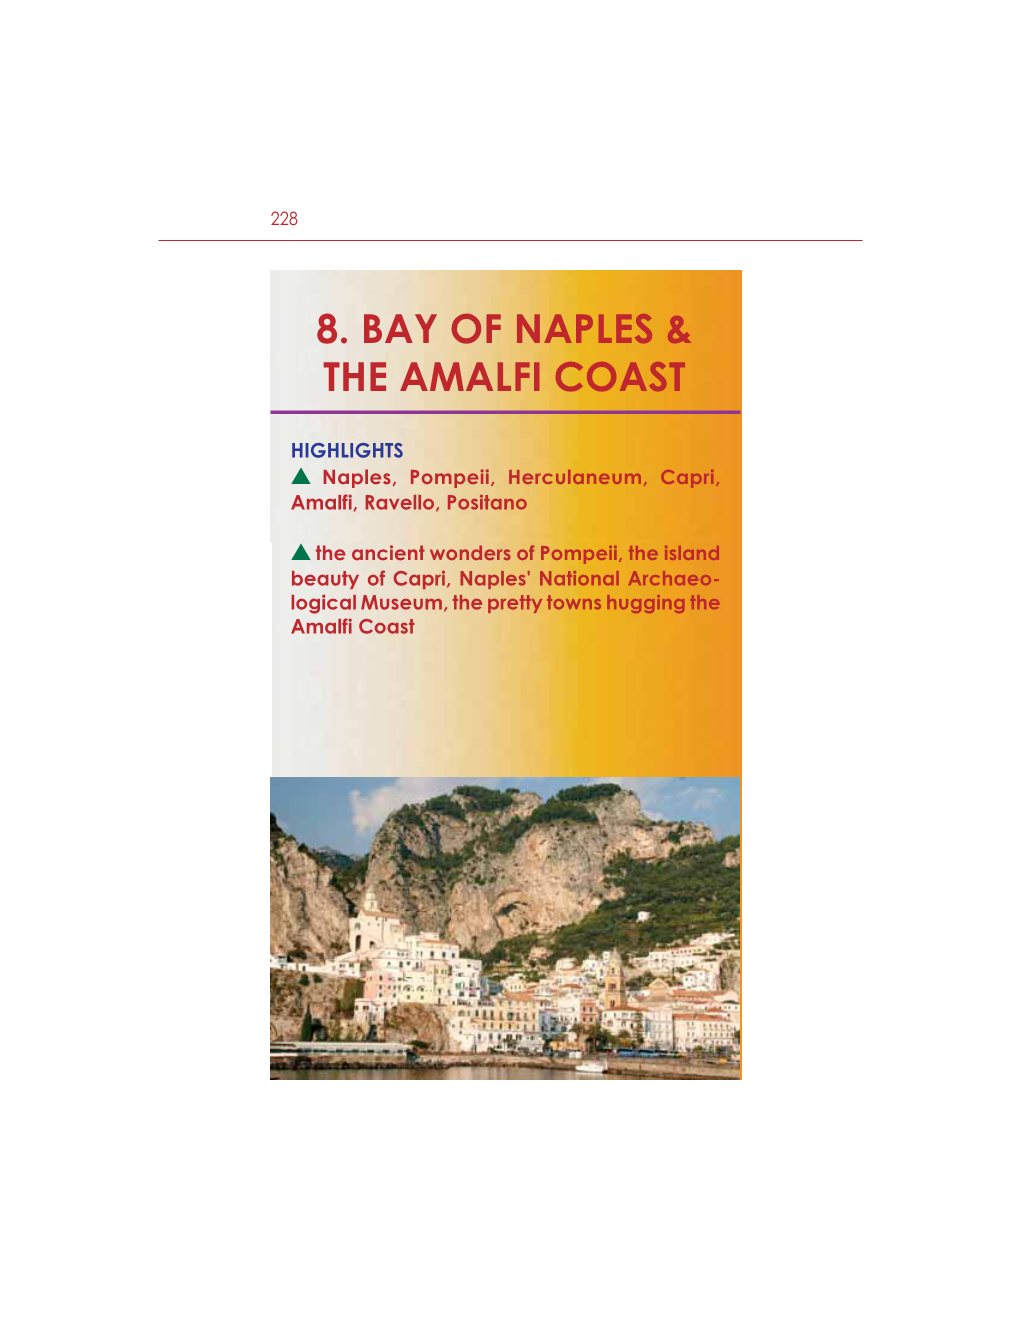 8. Bay of Naples & the Amalfi Coast